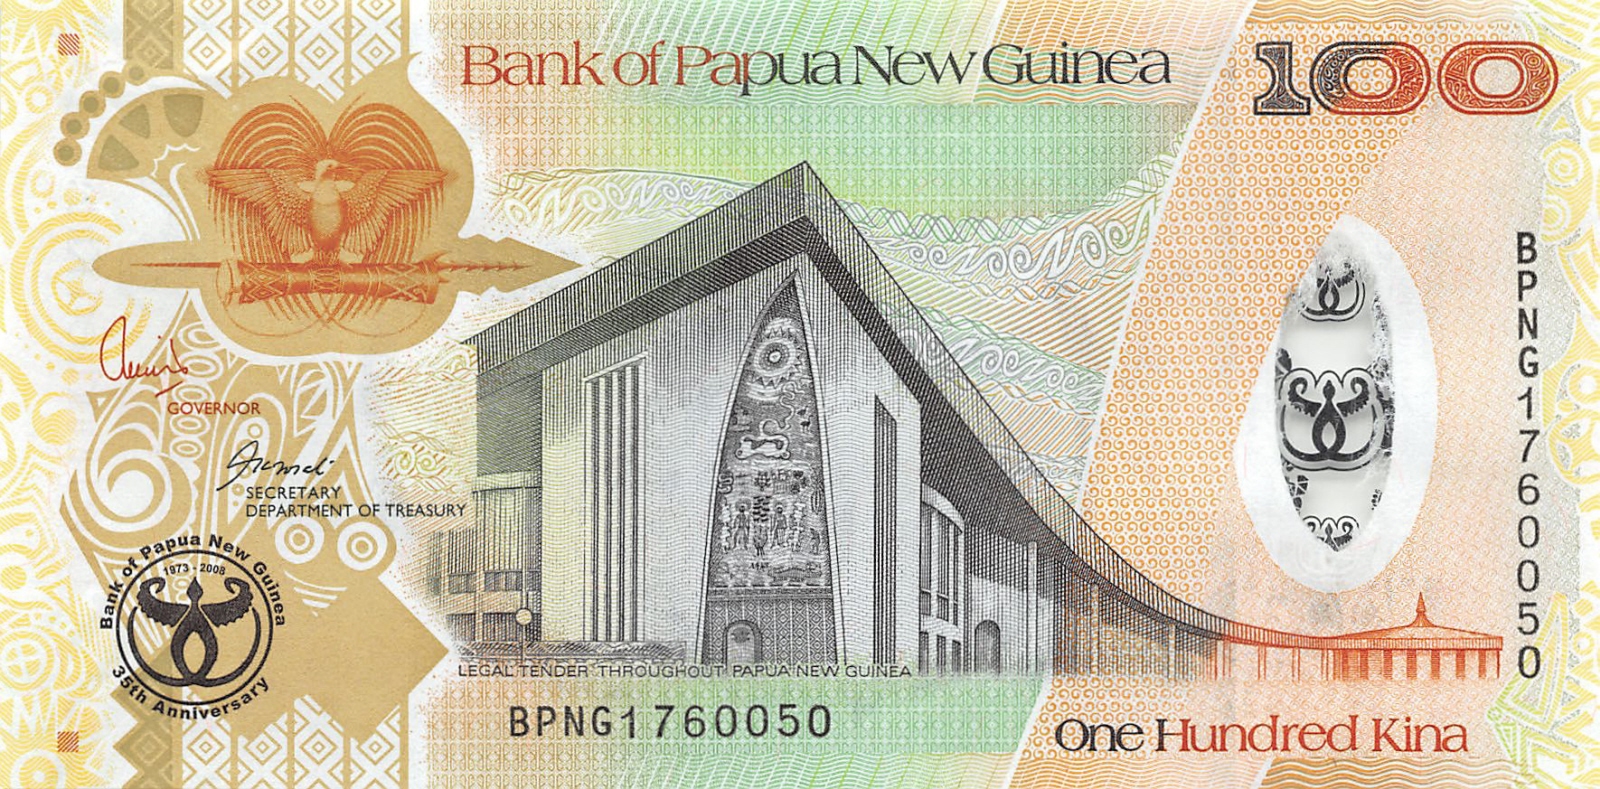 5RW 09AGO PAPUA NEW GUINEA  20 KINA 2008  UNC  P 36 COMMEMORATIVE 